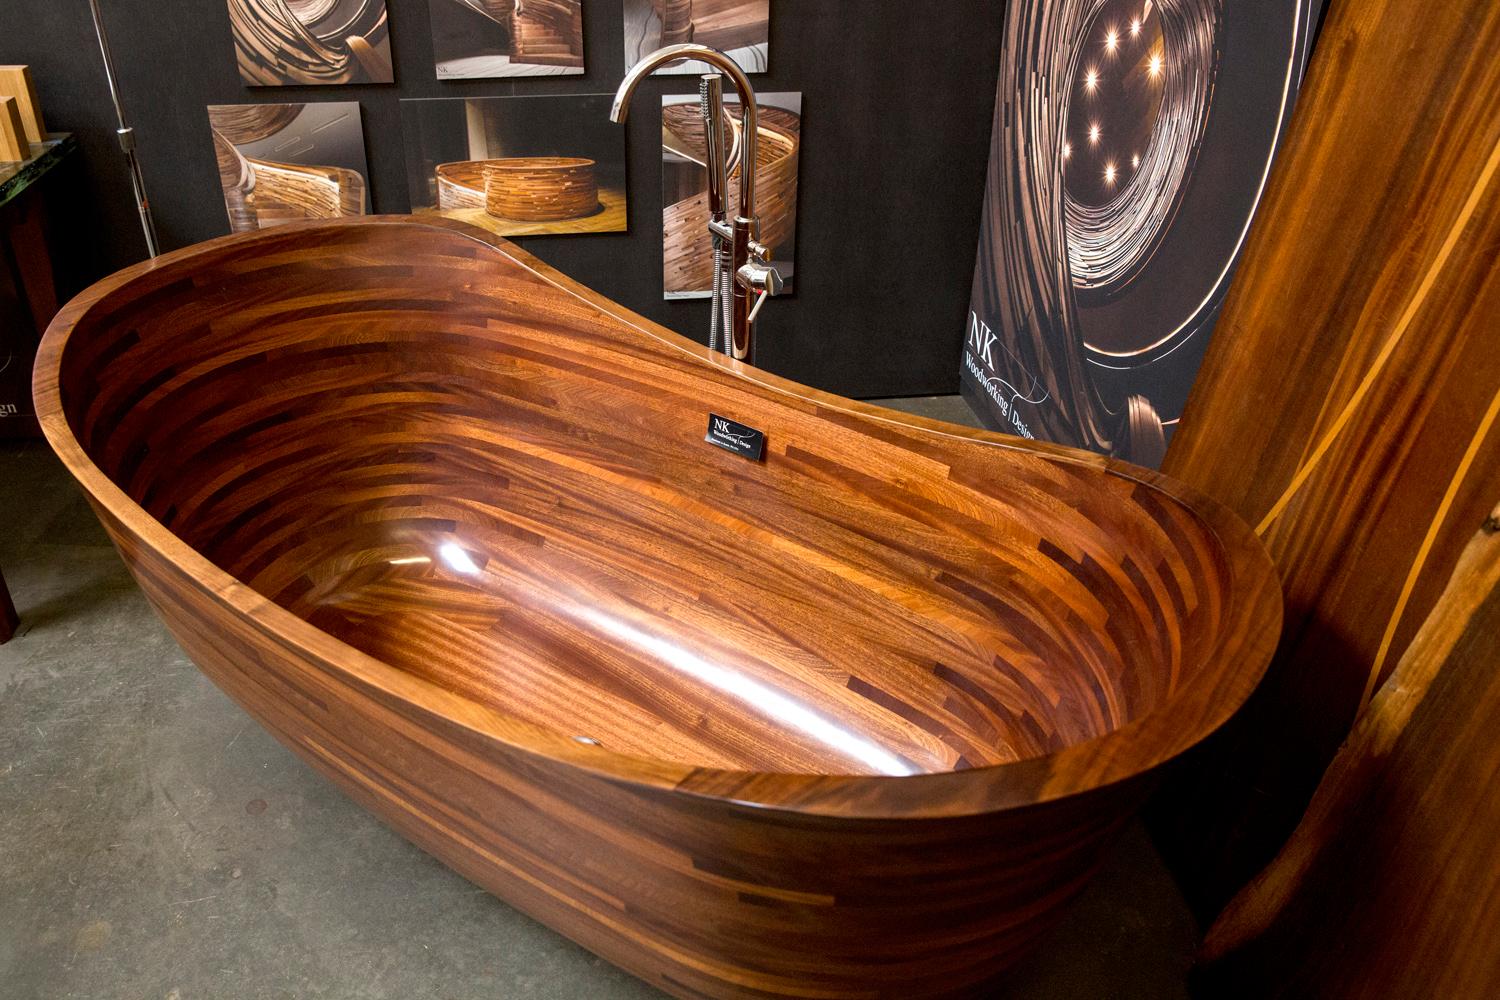 Former Boat Builder Sculpts Stunning Wooden Bathtubs